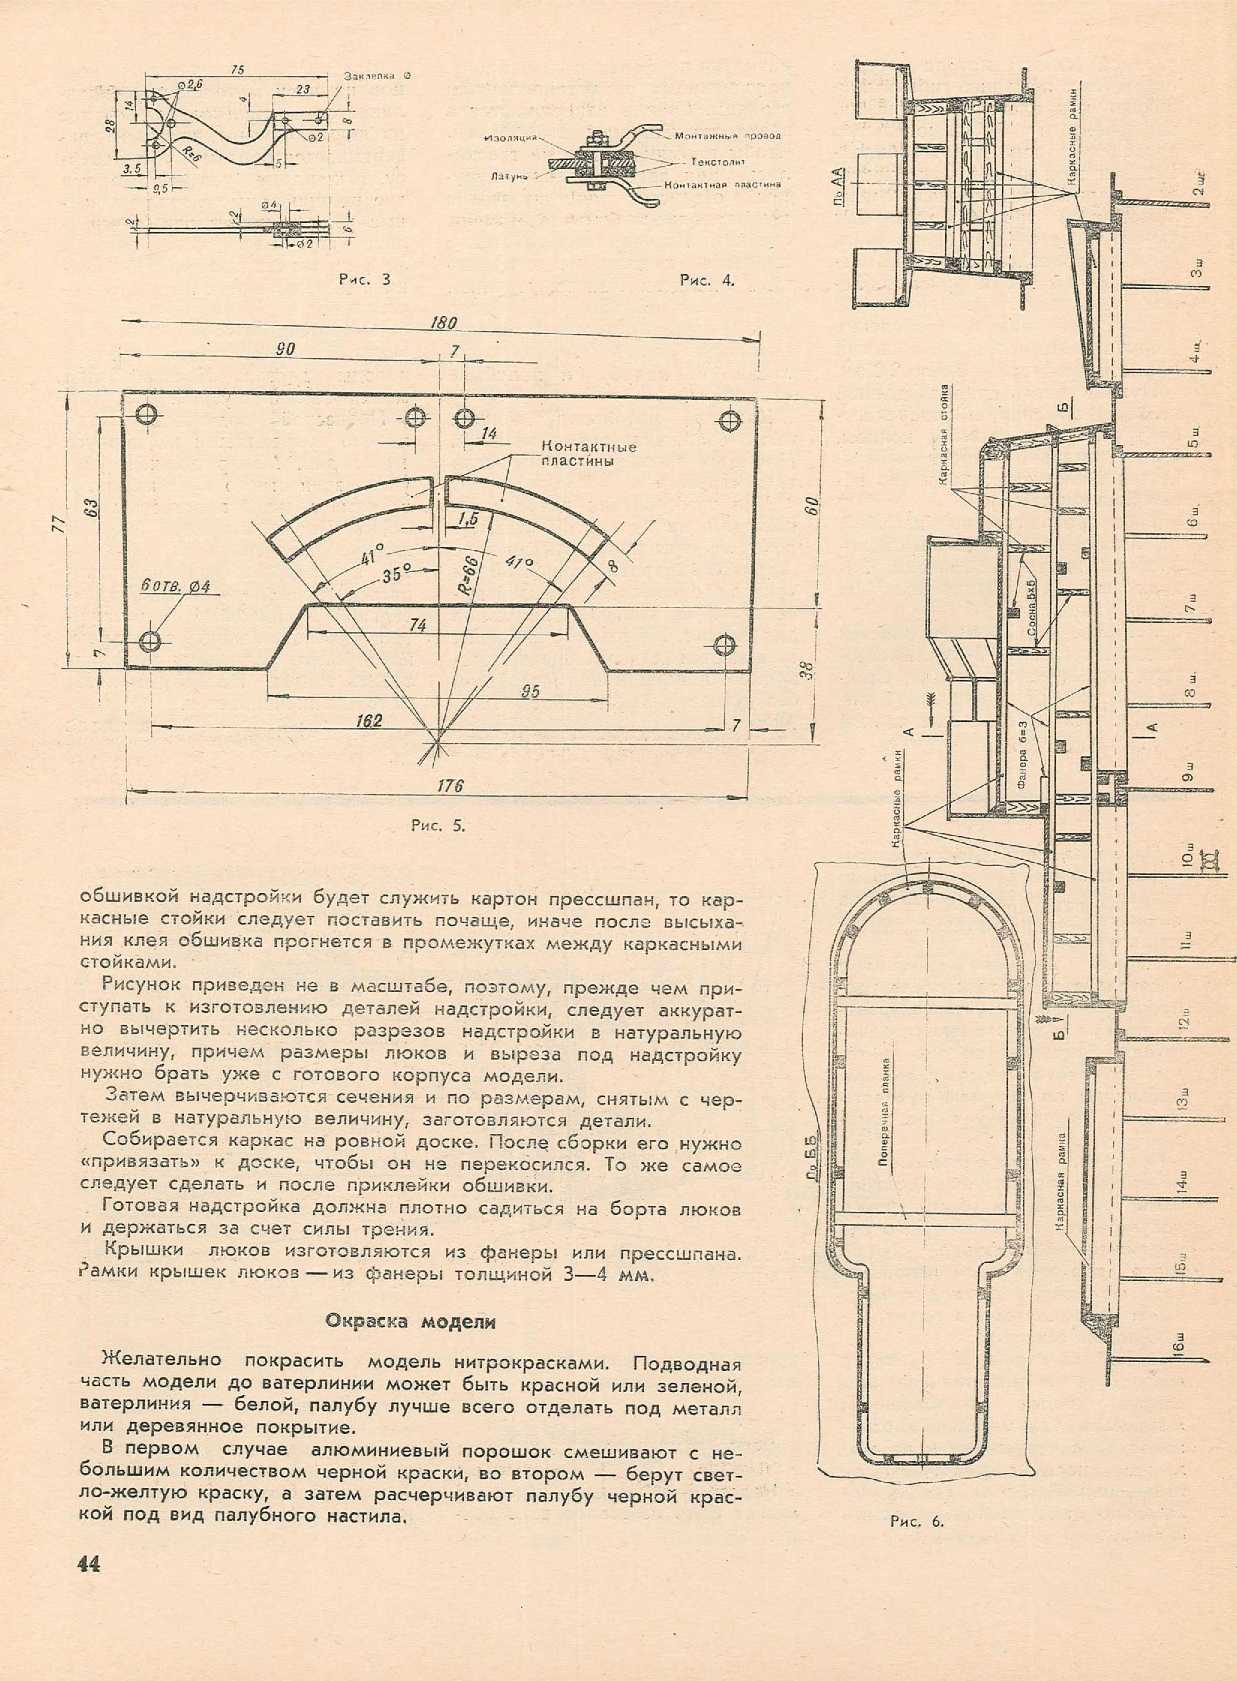 ЮМК 10, 1964, 44 c.